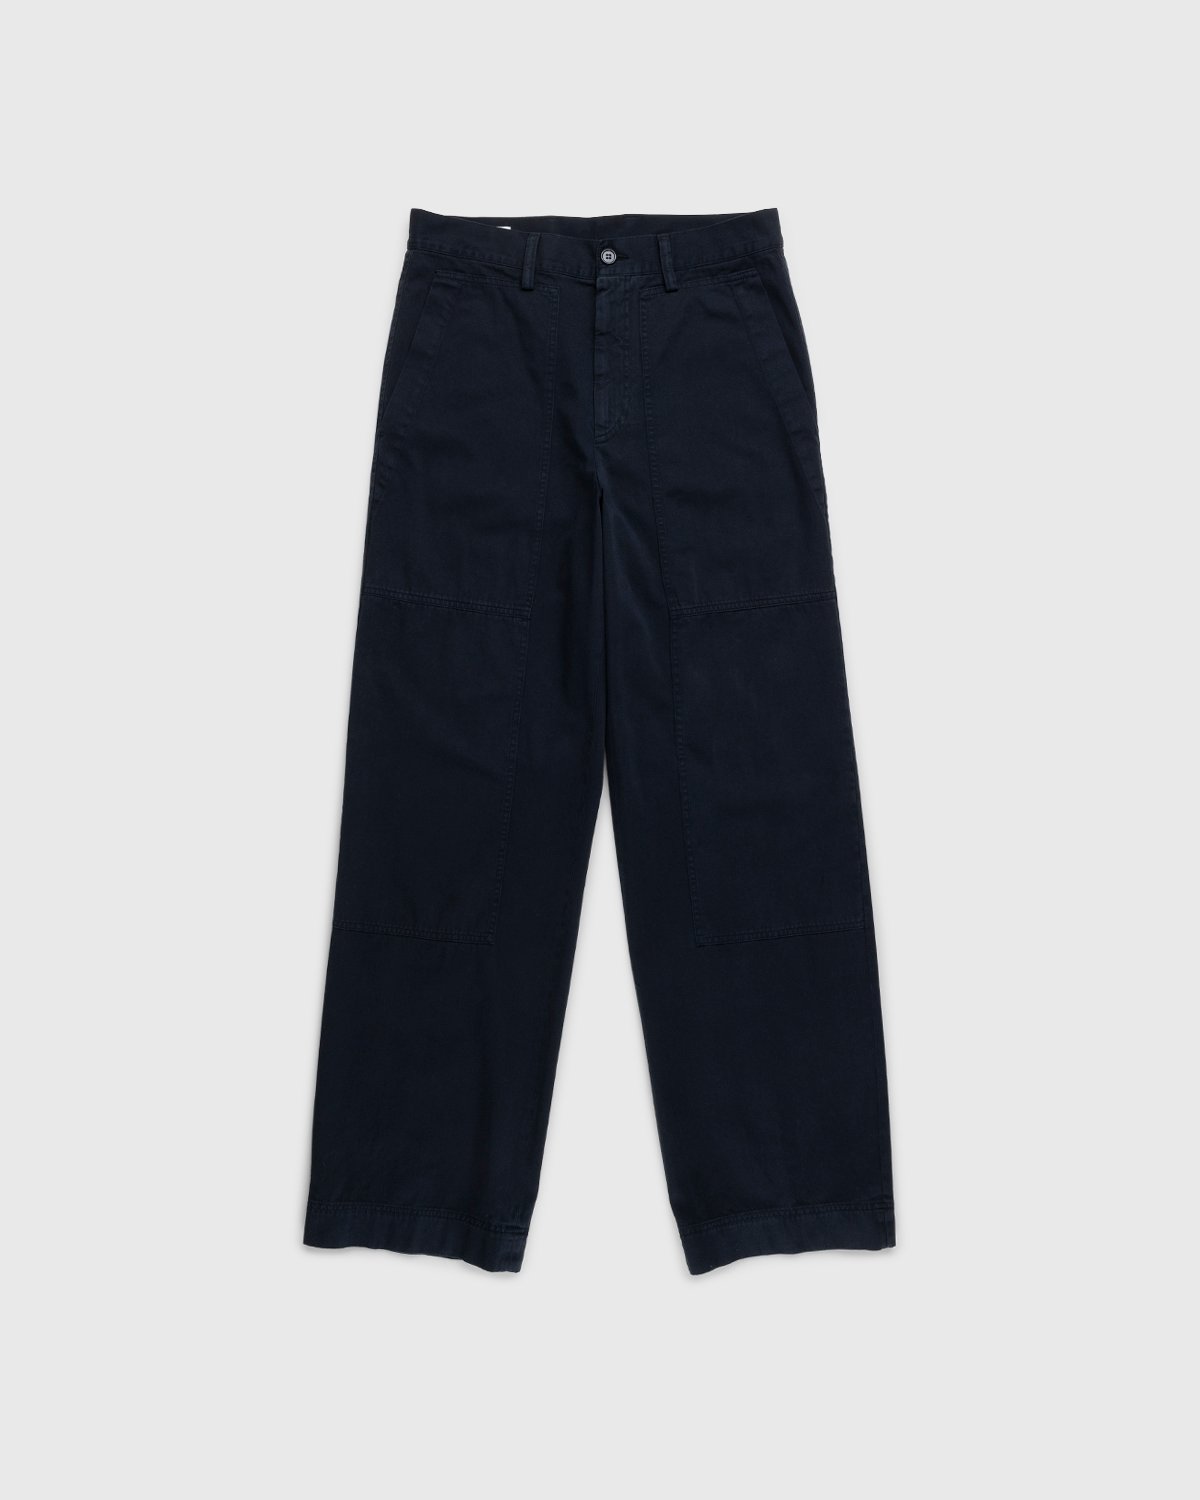 Dries van Noten - Pilson Pants Navy - Clothing - Blue - Image 1